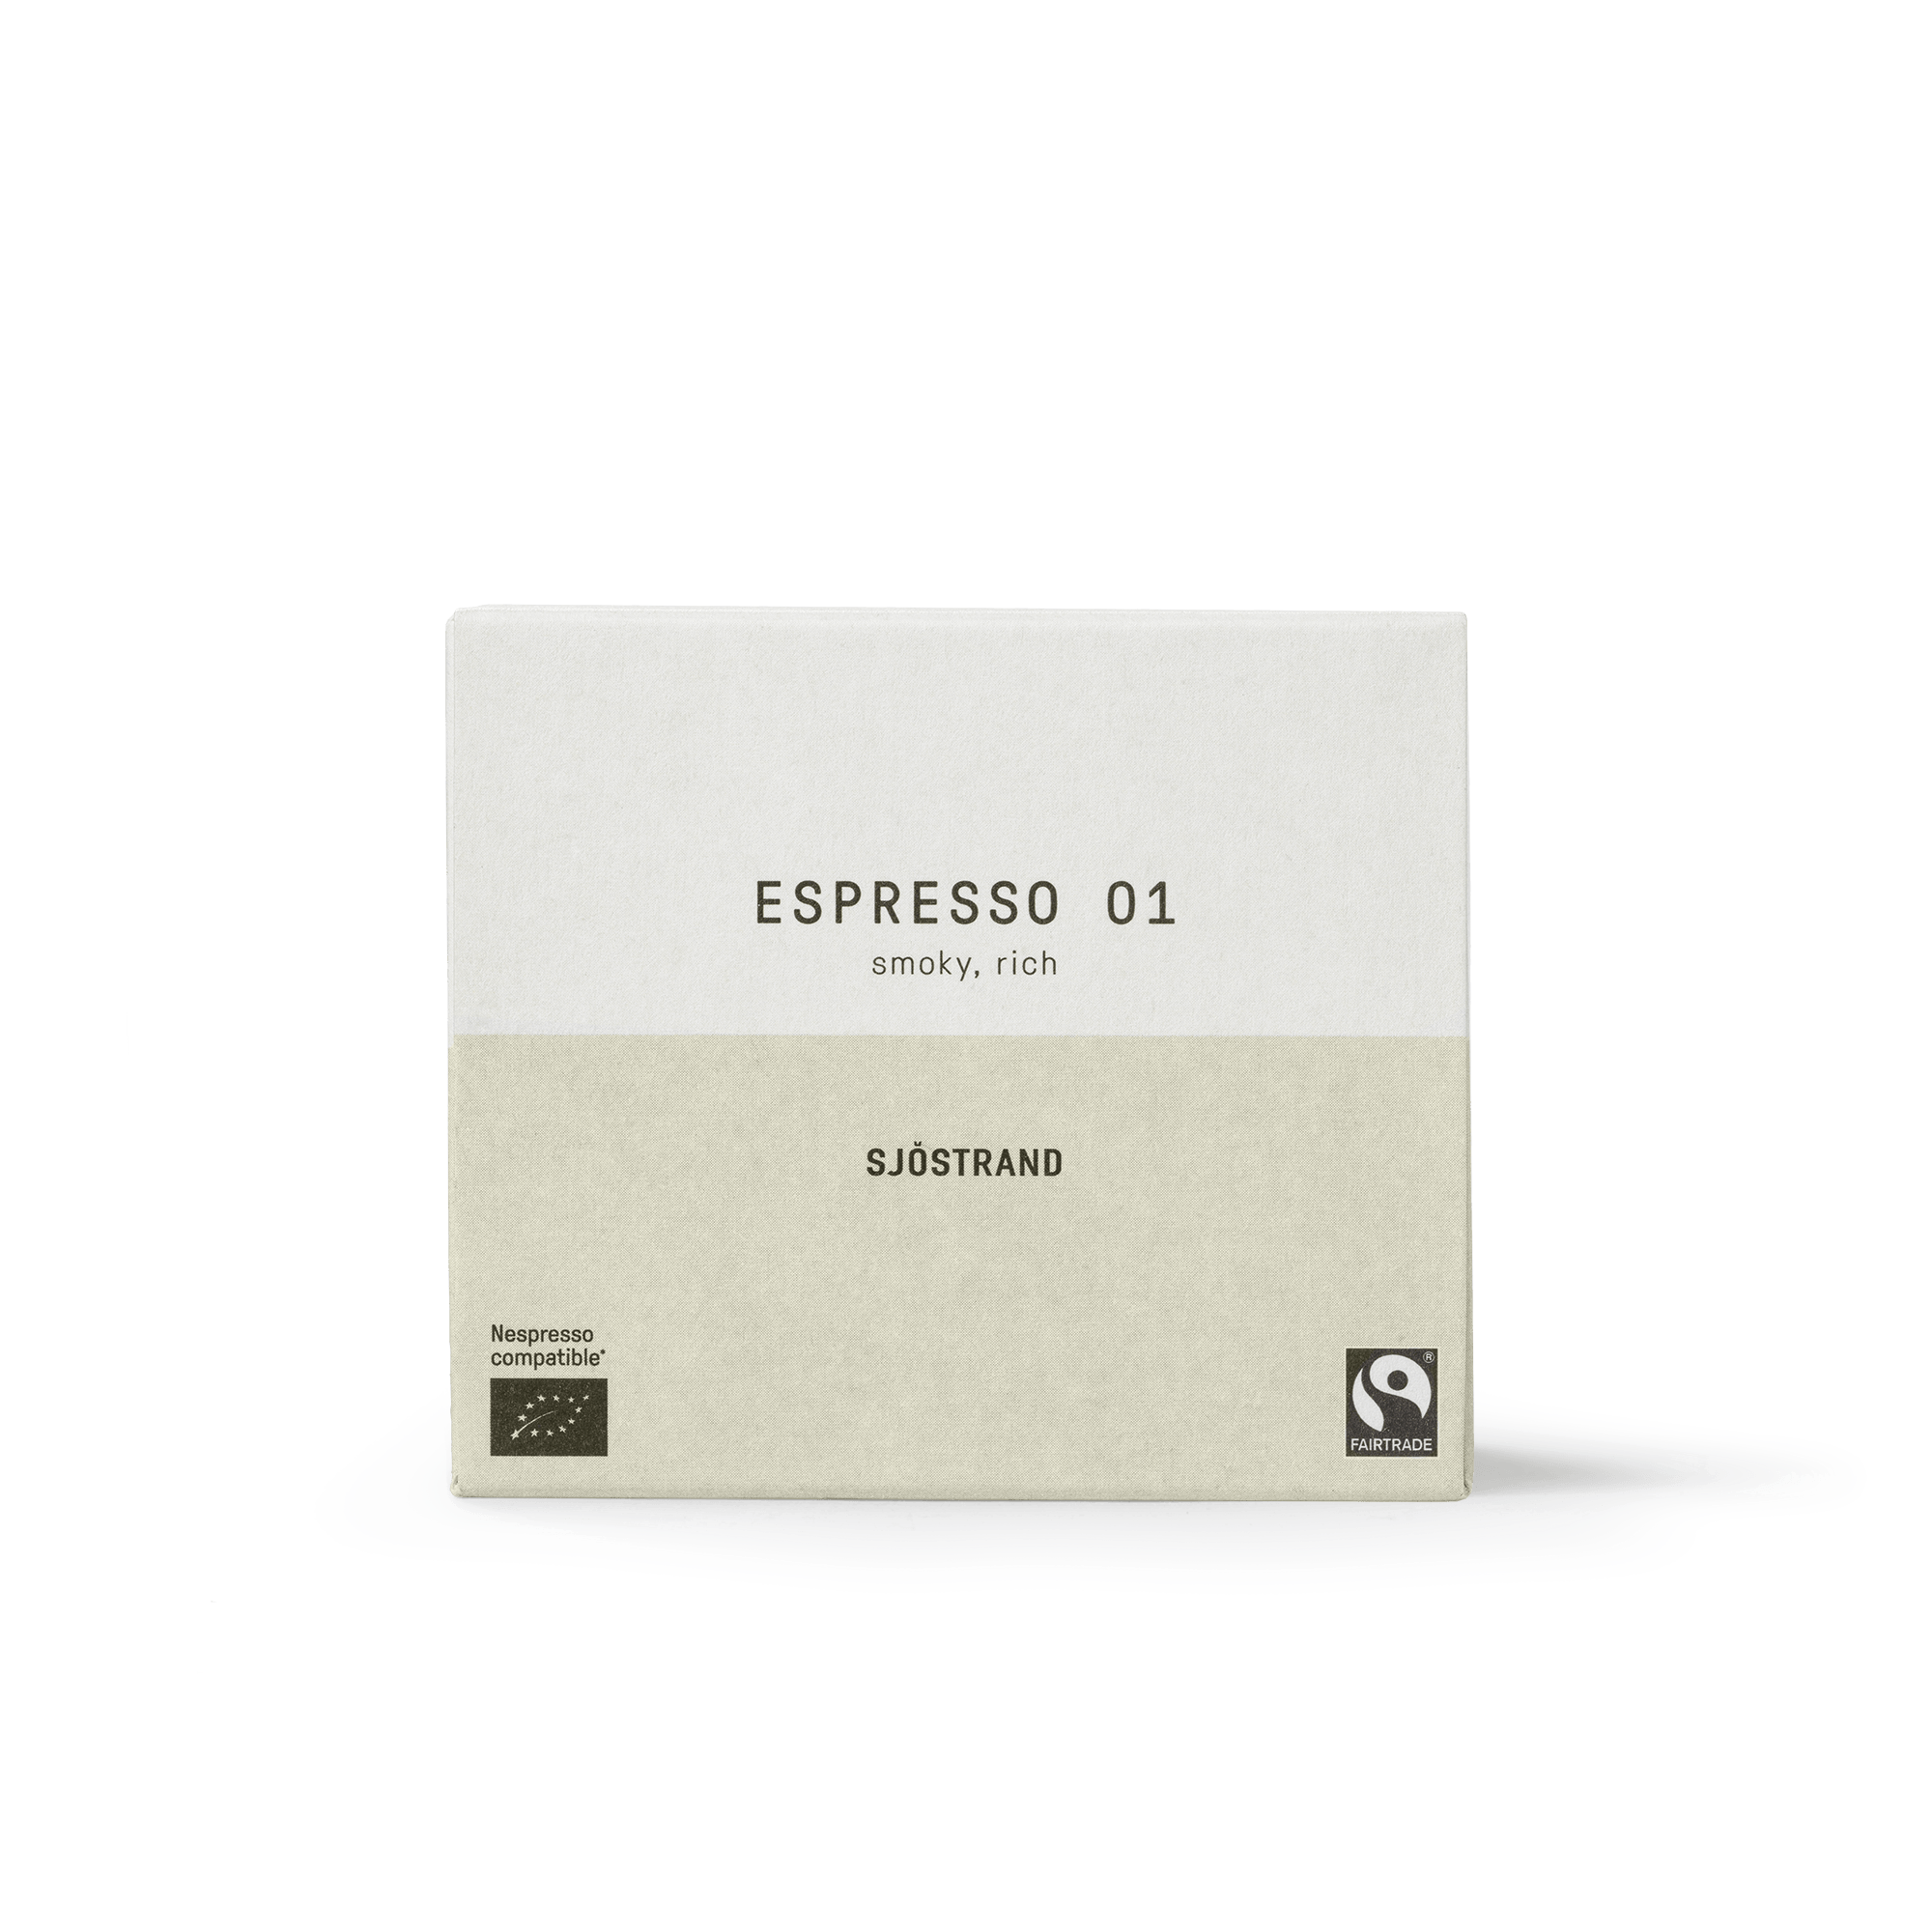 Espresso 01 - EKO image